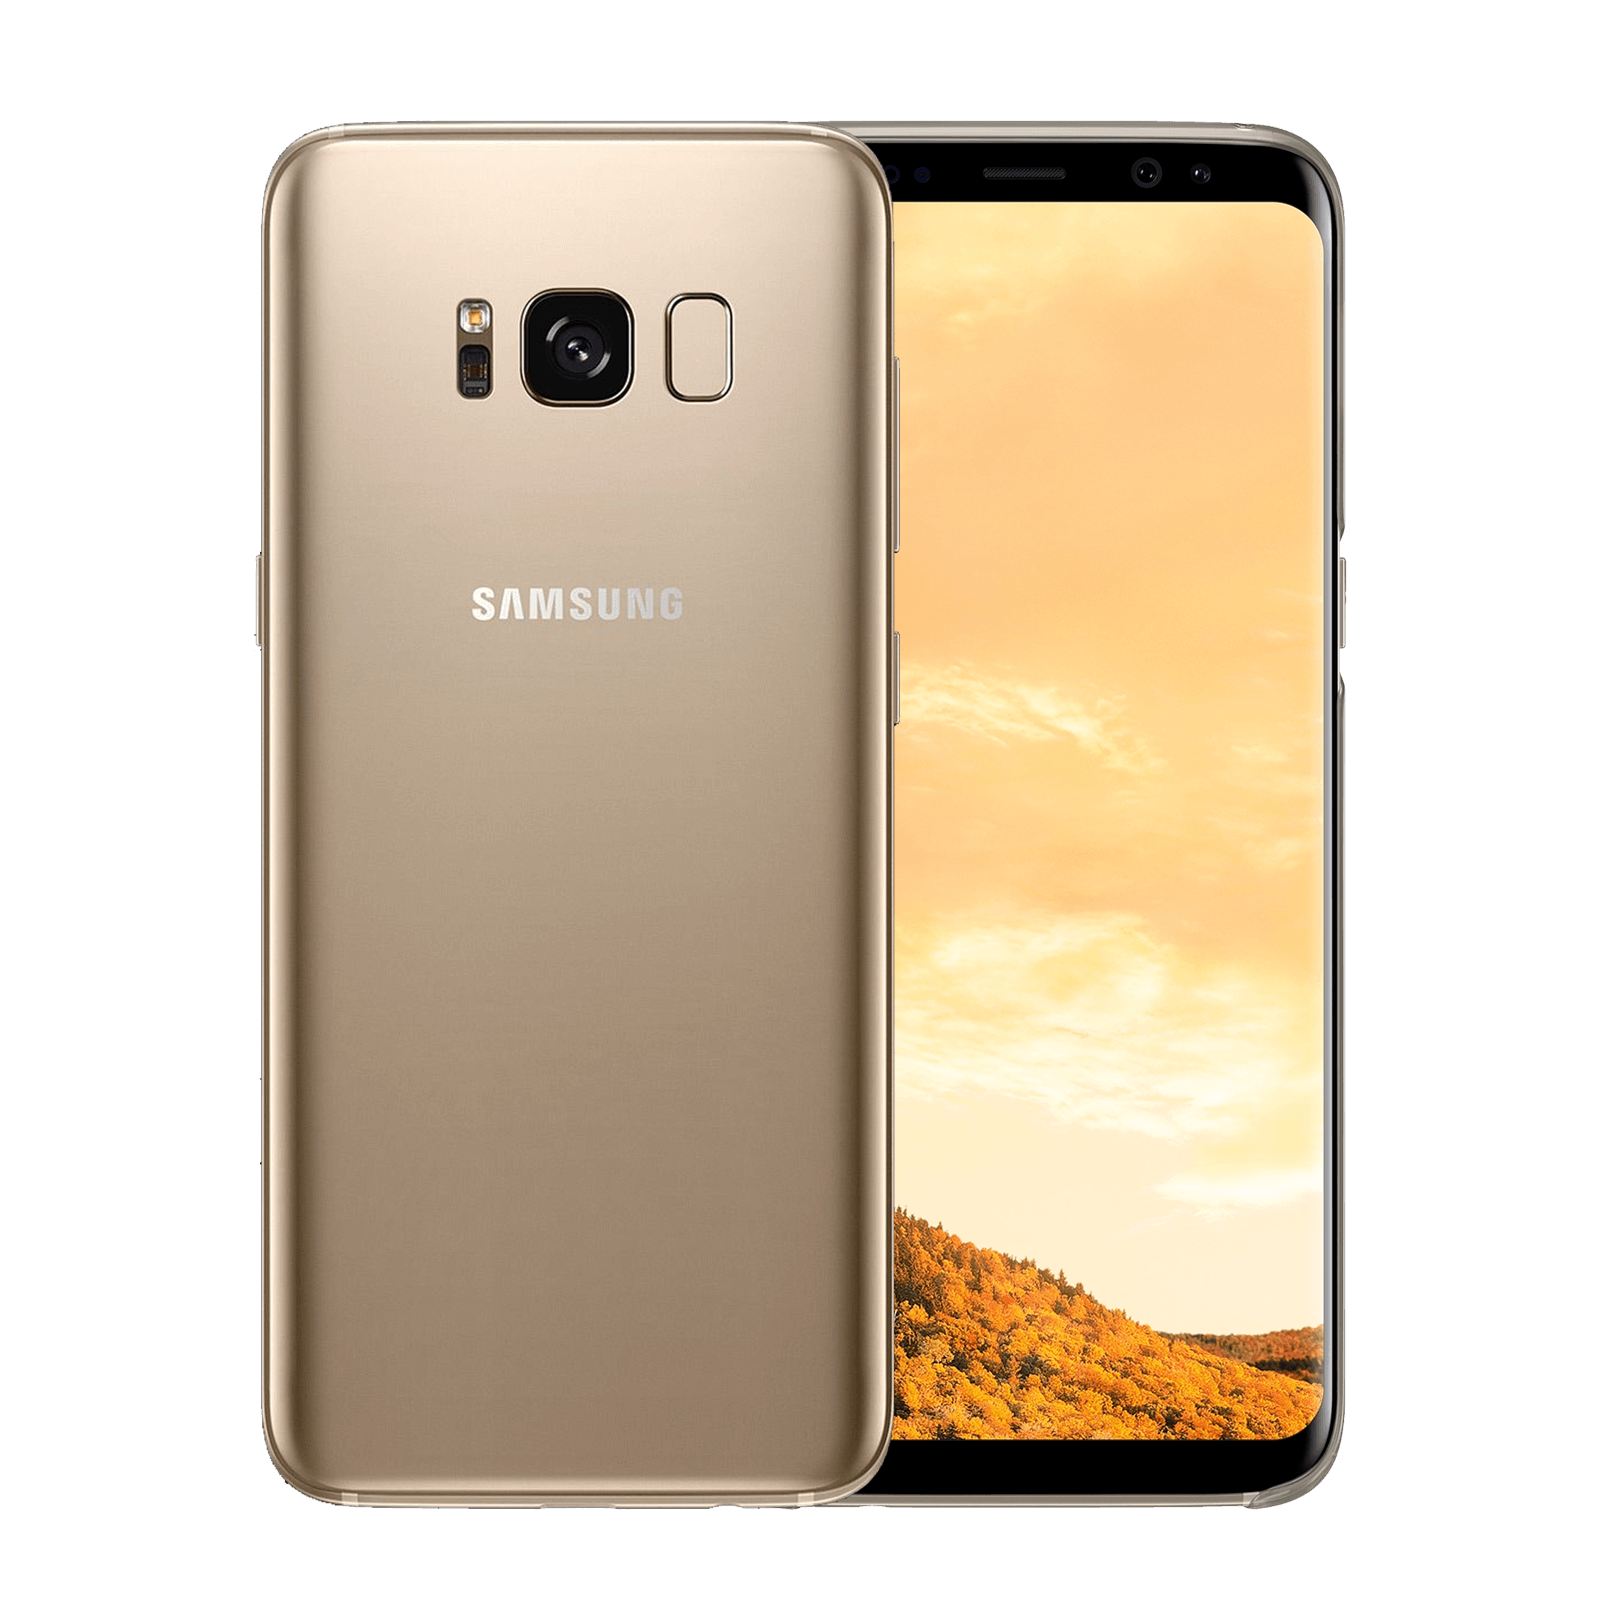 Samsung Galaxy S8 Plus 64GB Gold G955F Very Good - Unlocked 64GB Gold Very Good